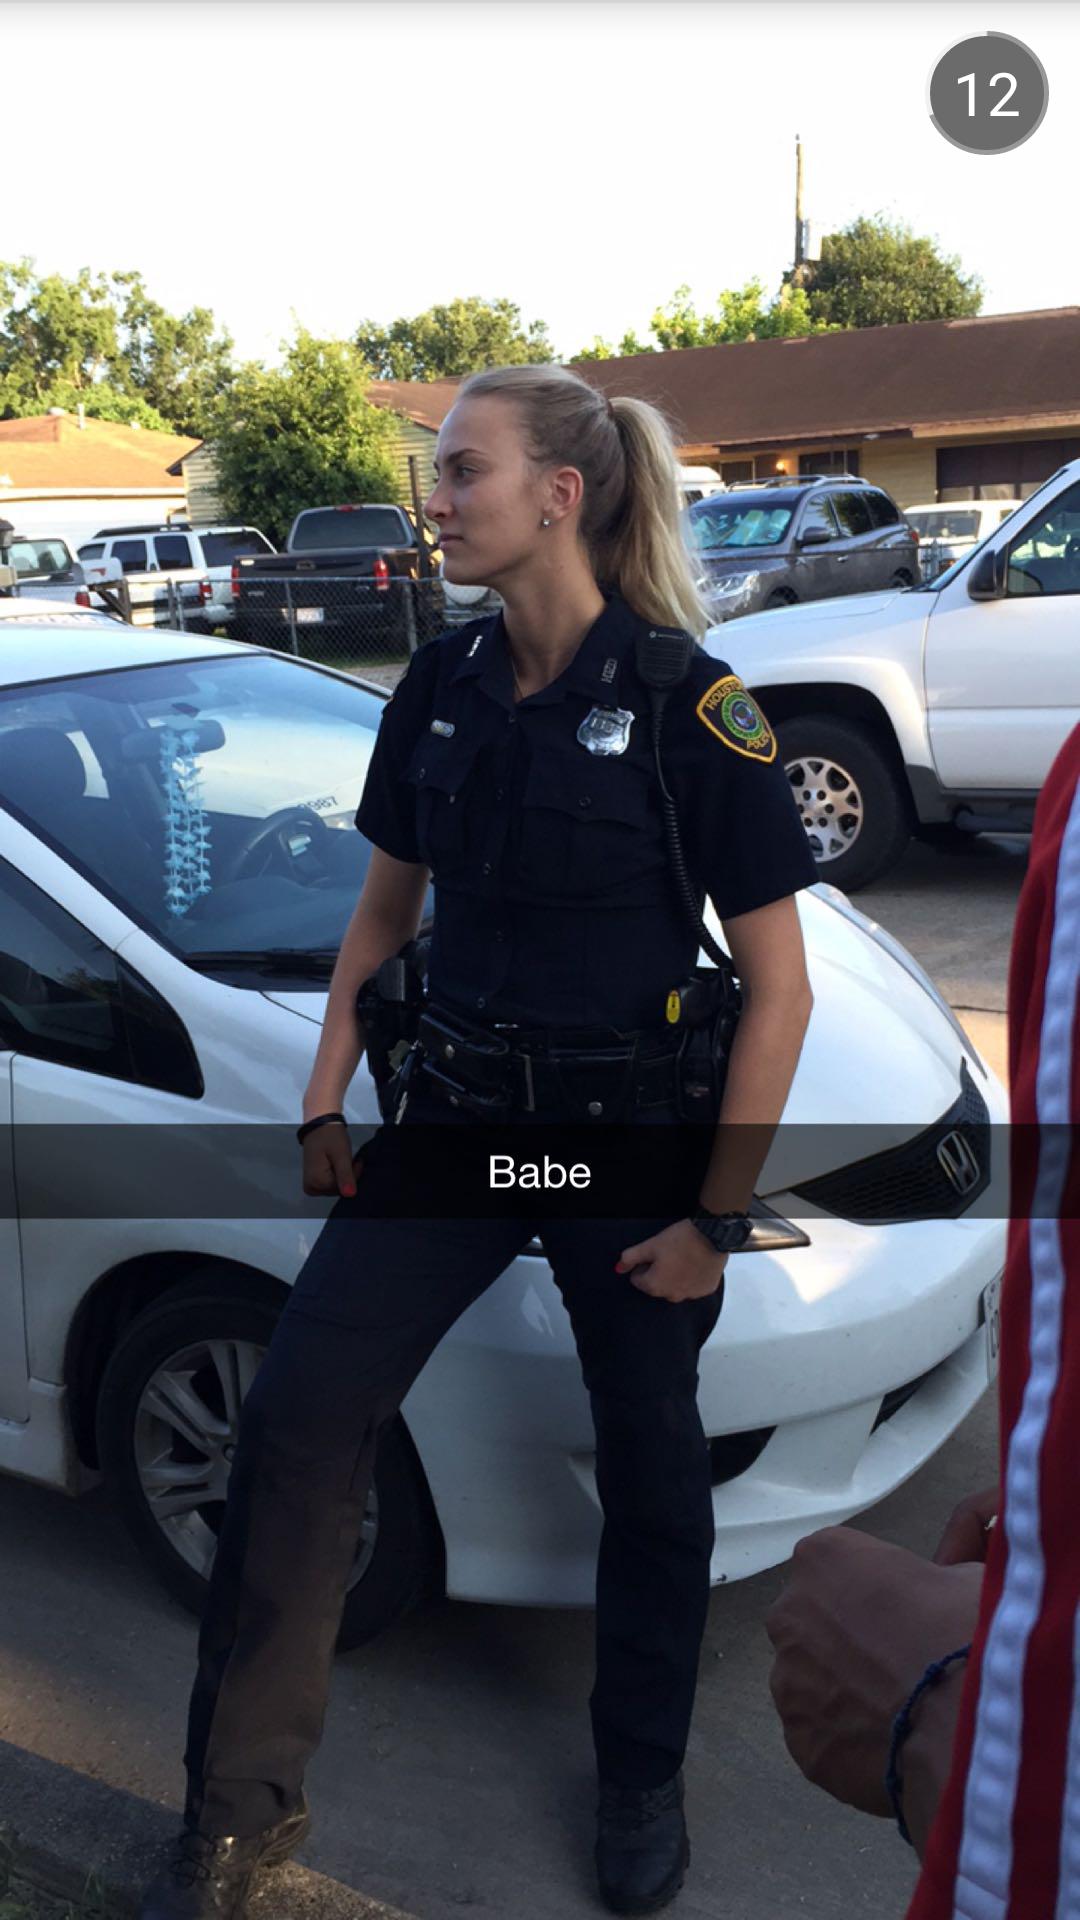 Hot Police Women